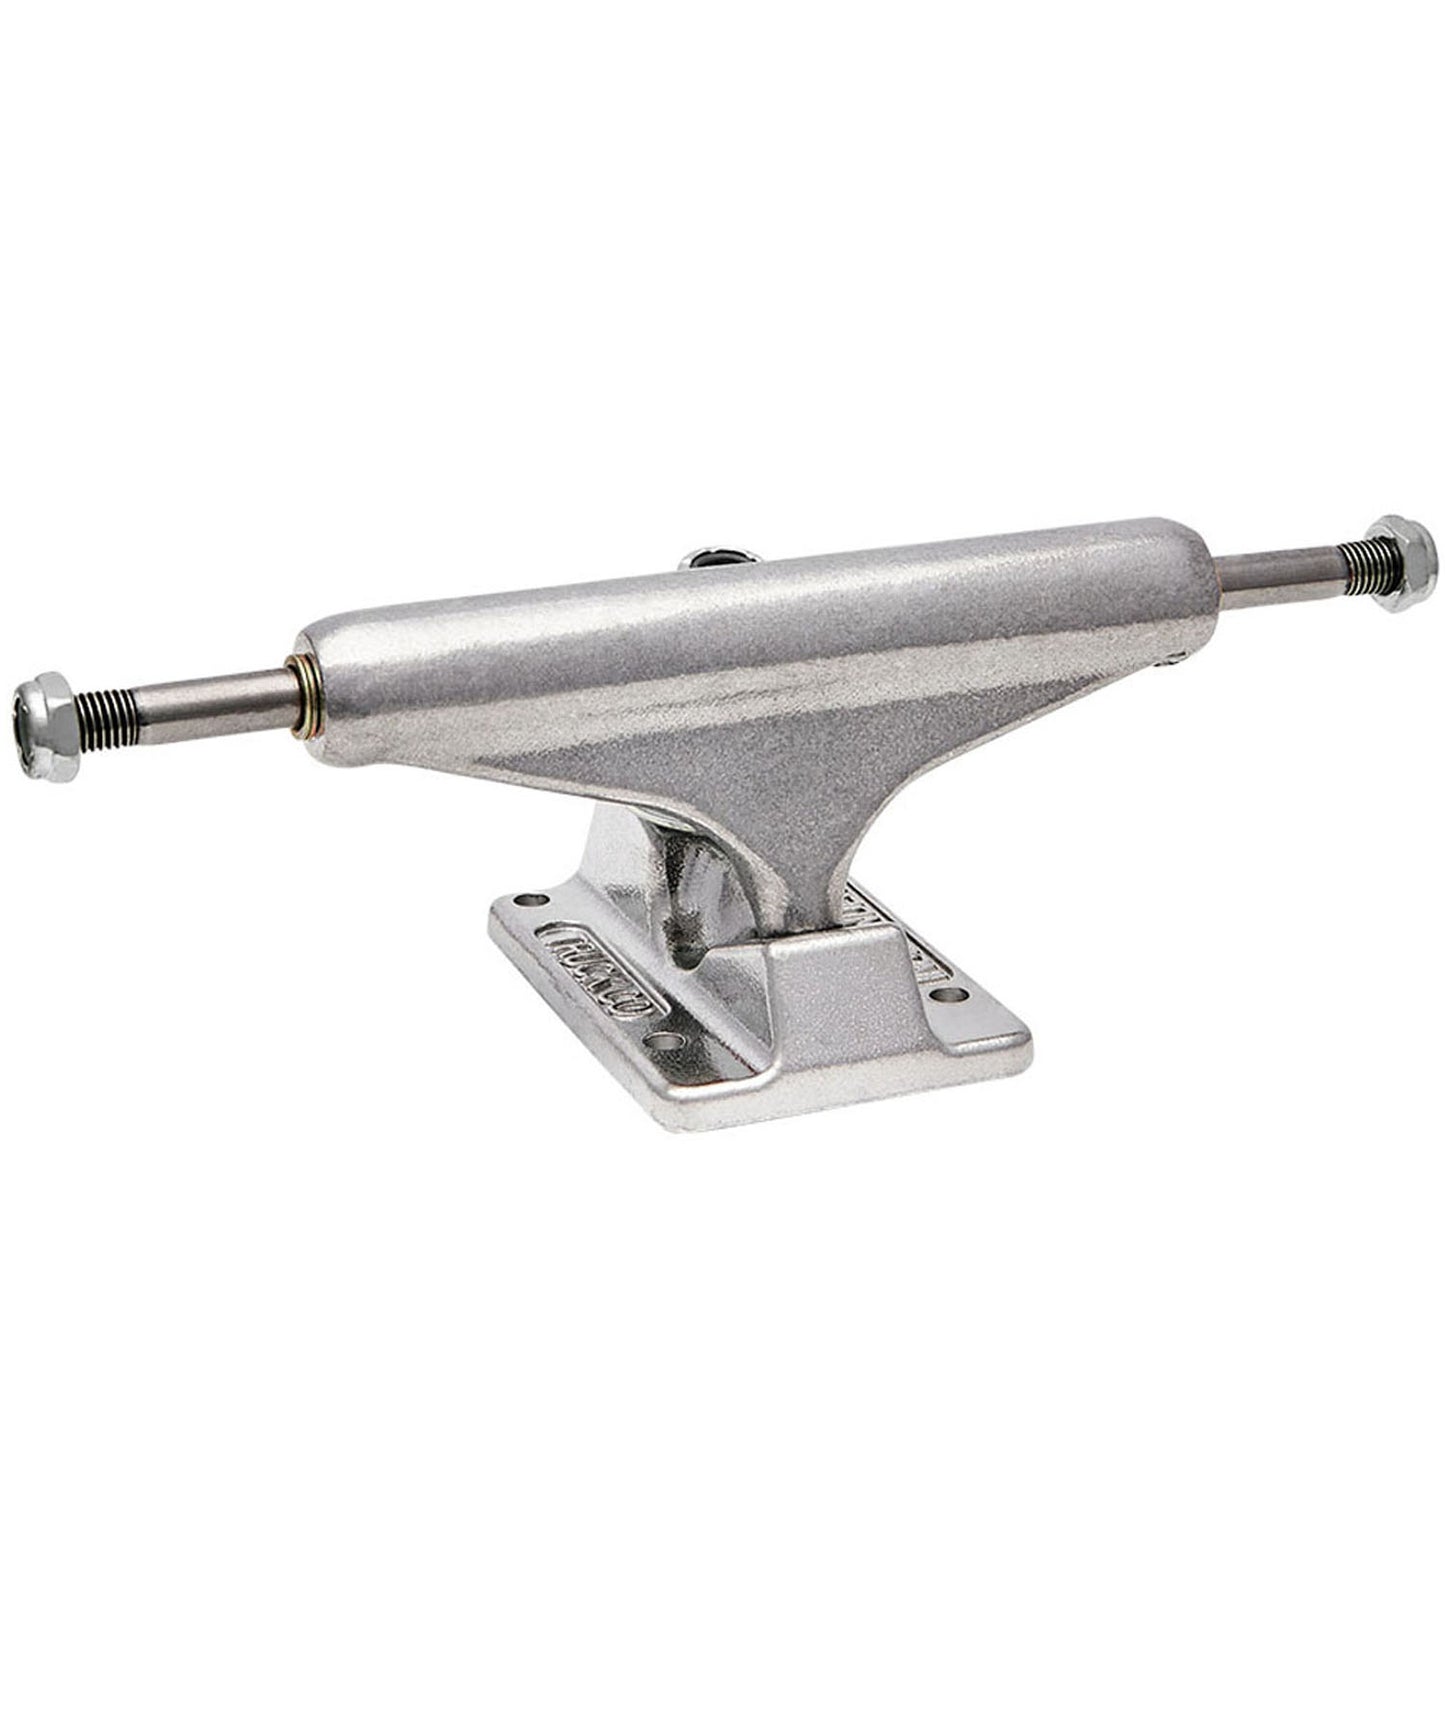 independent-standard-polished-129mm-ejes de calidad-para skate-hanger y placa base de aluminio-duraderos-independent-marca reputada en ejes.